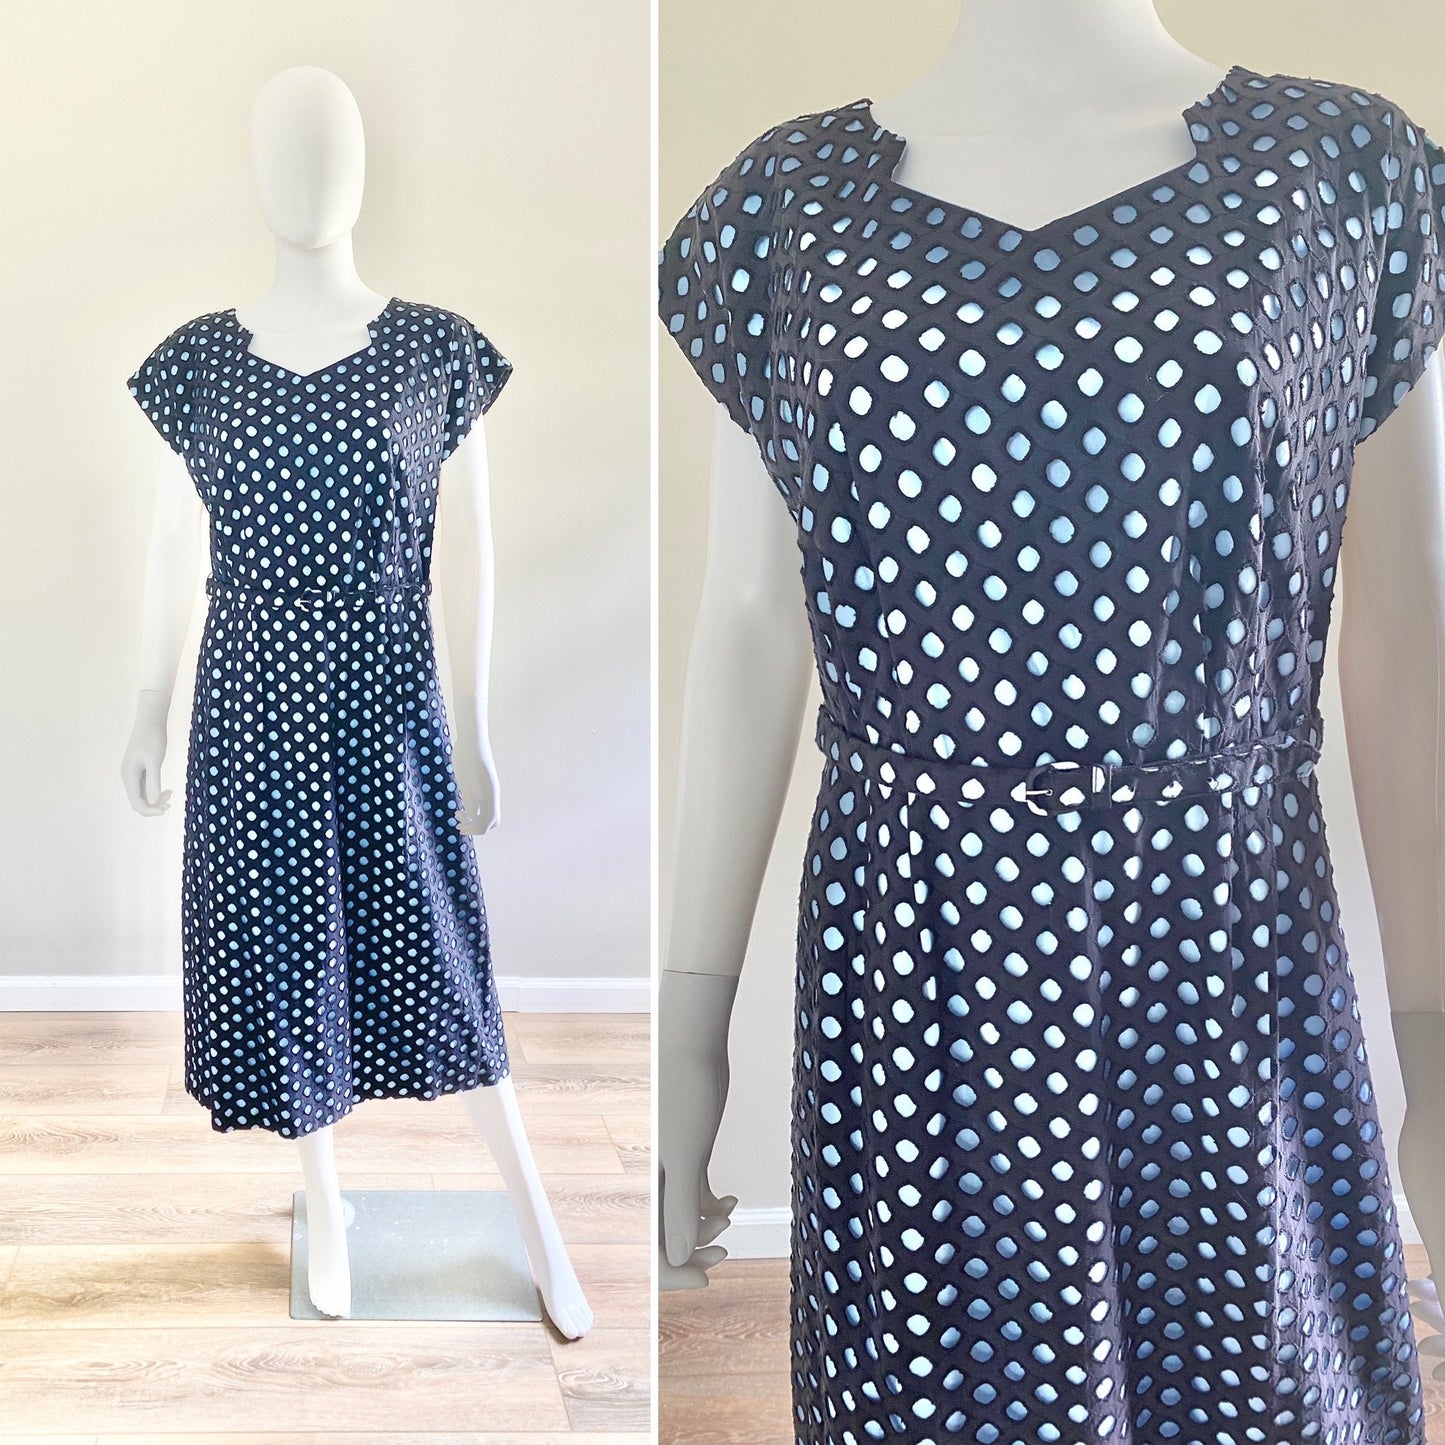 Vintage 1950s Plus Size Navy Eyelet Cotton Dress / 50s Retro Navy and Periwinkle Wiggle Dress / Size 2X